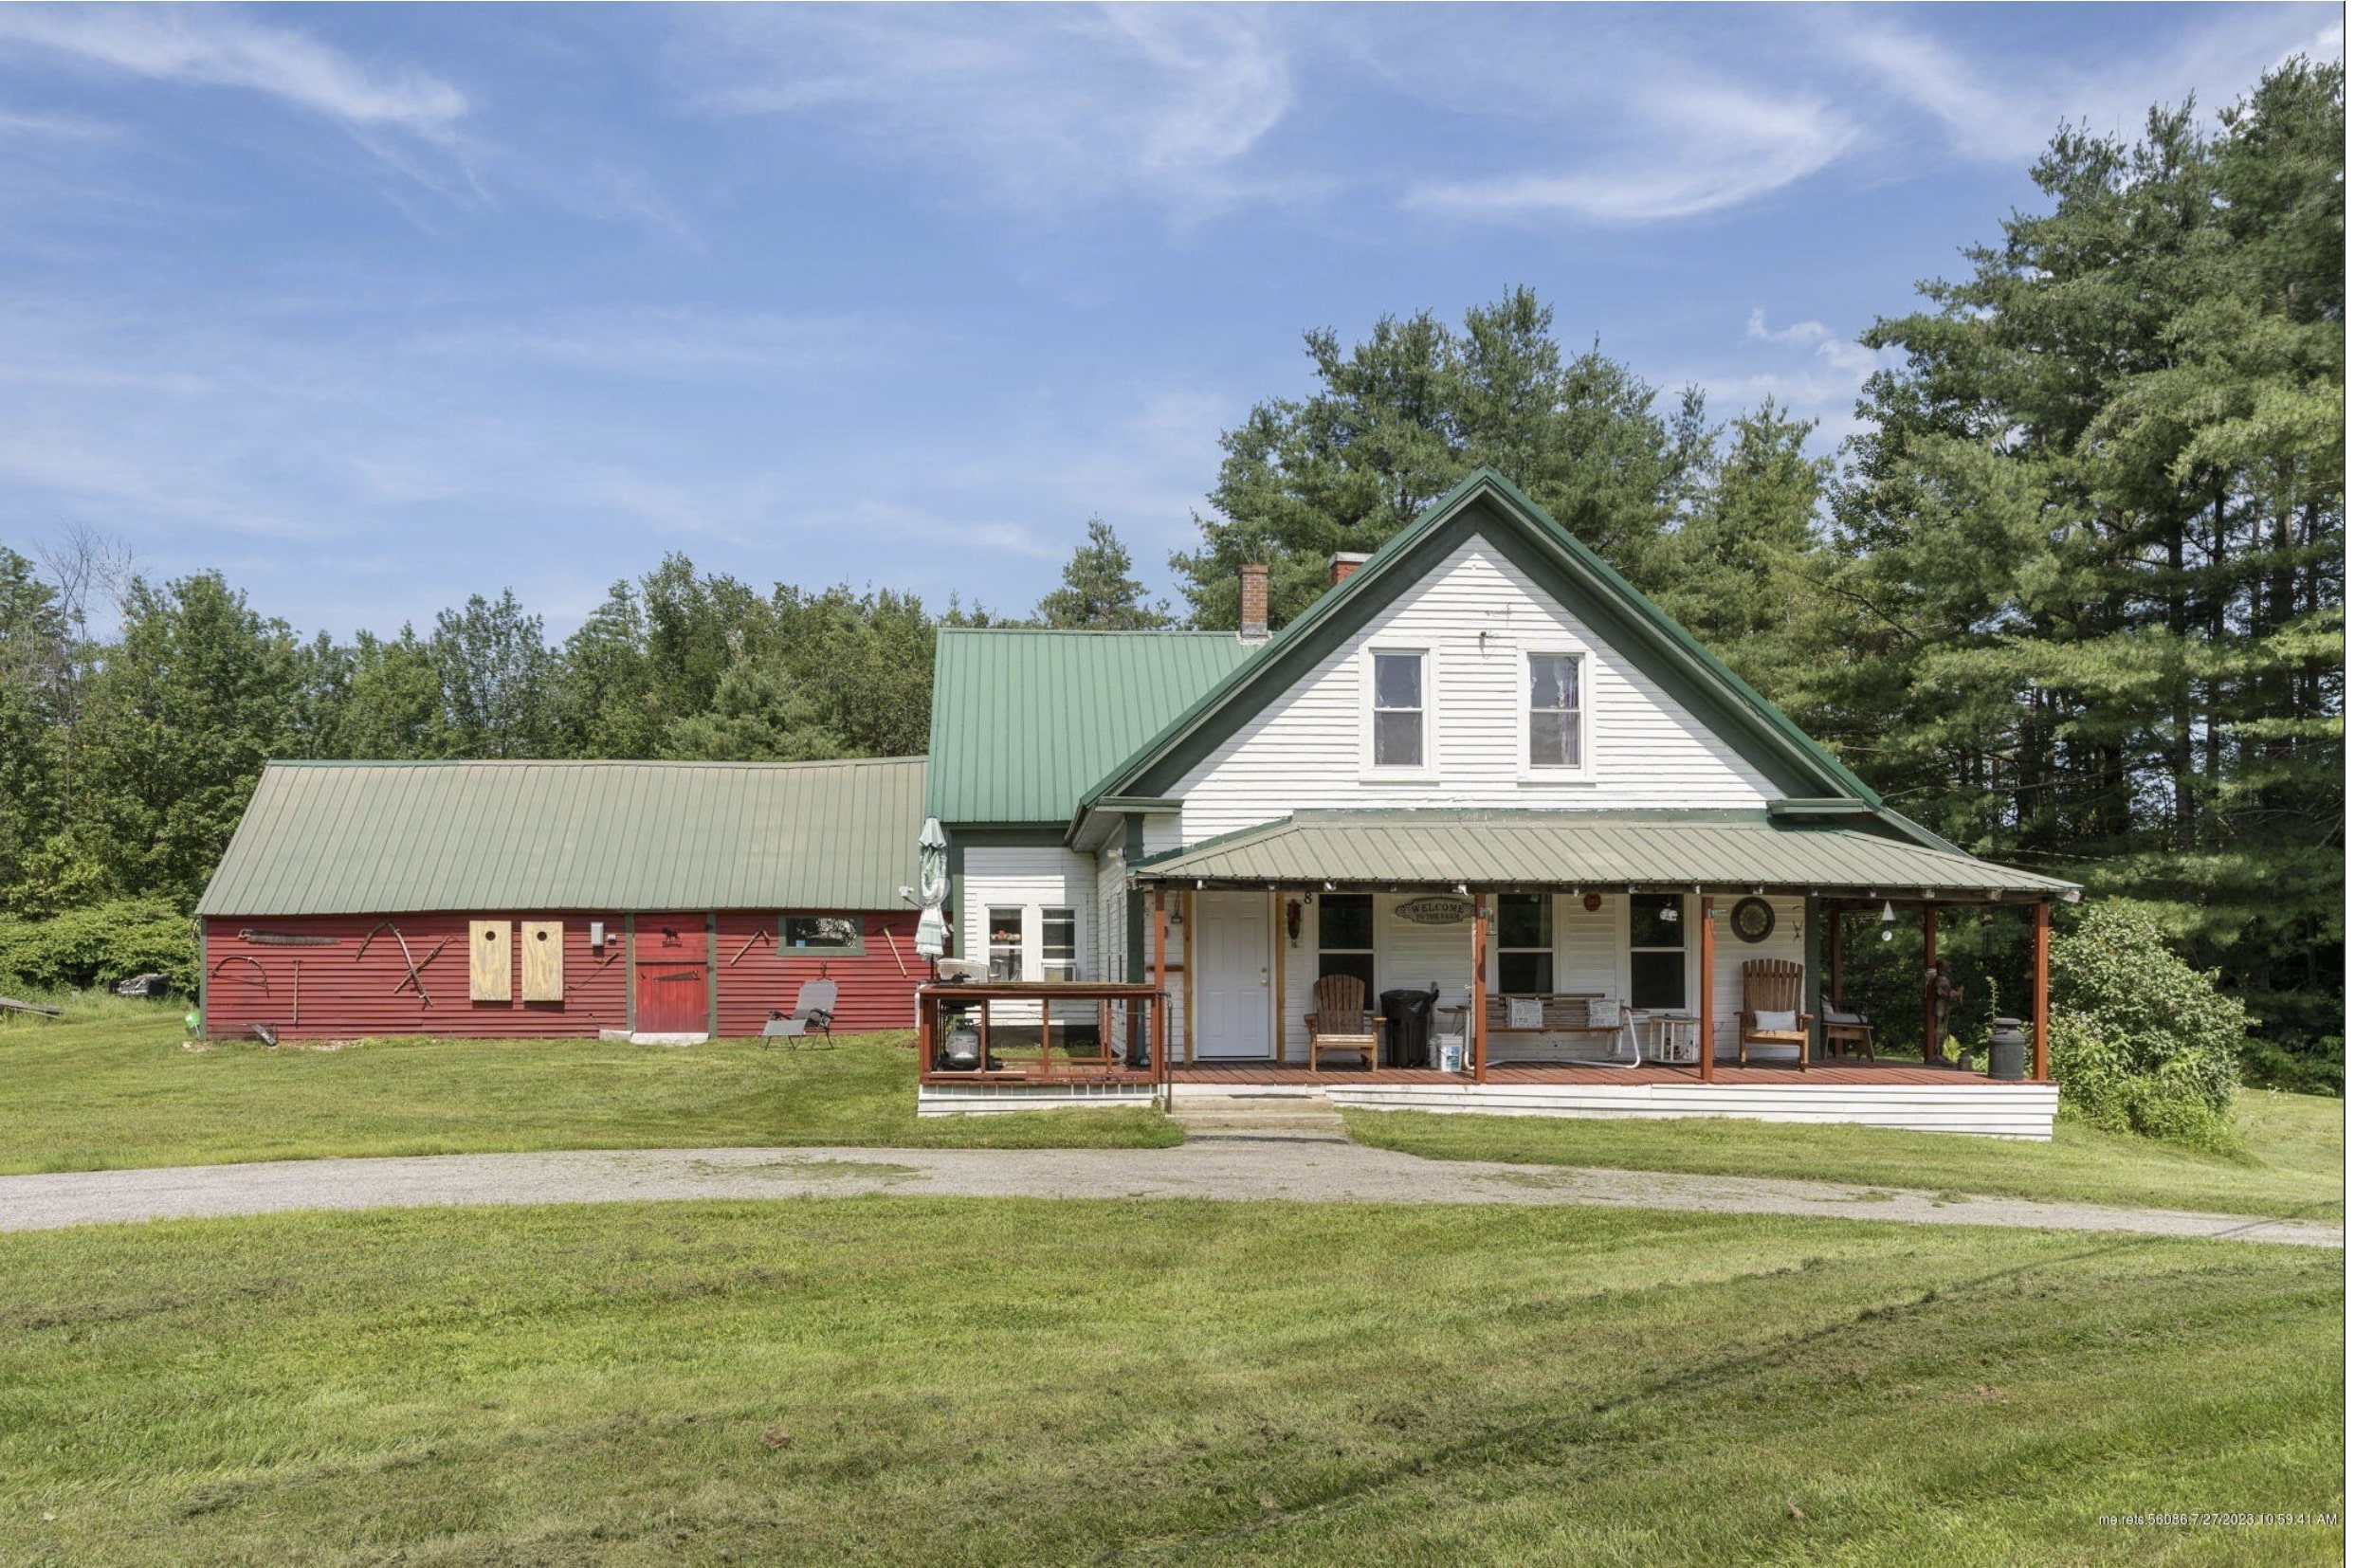 1935 Maine Farmhouse For Sale W/Barn on 4 Acres $225,000 - Country Life ...